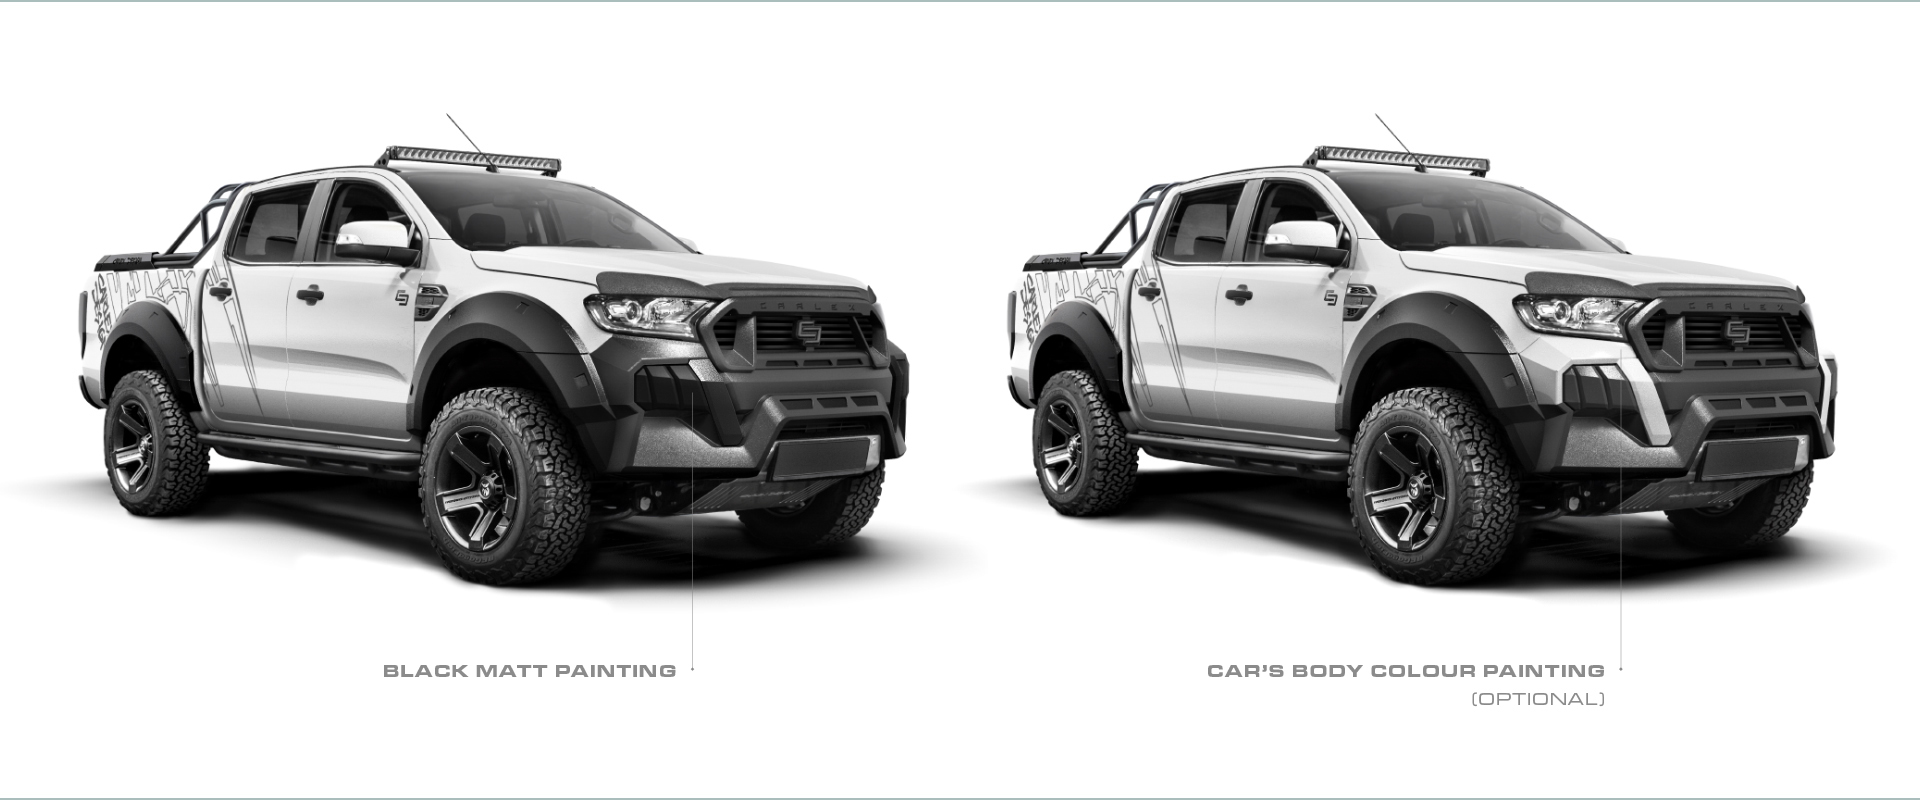 Ford Ranger by Carlex Design